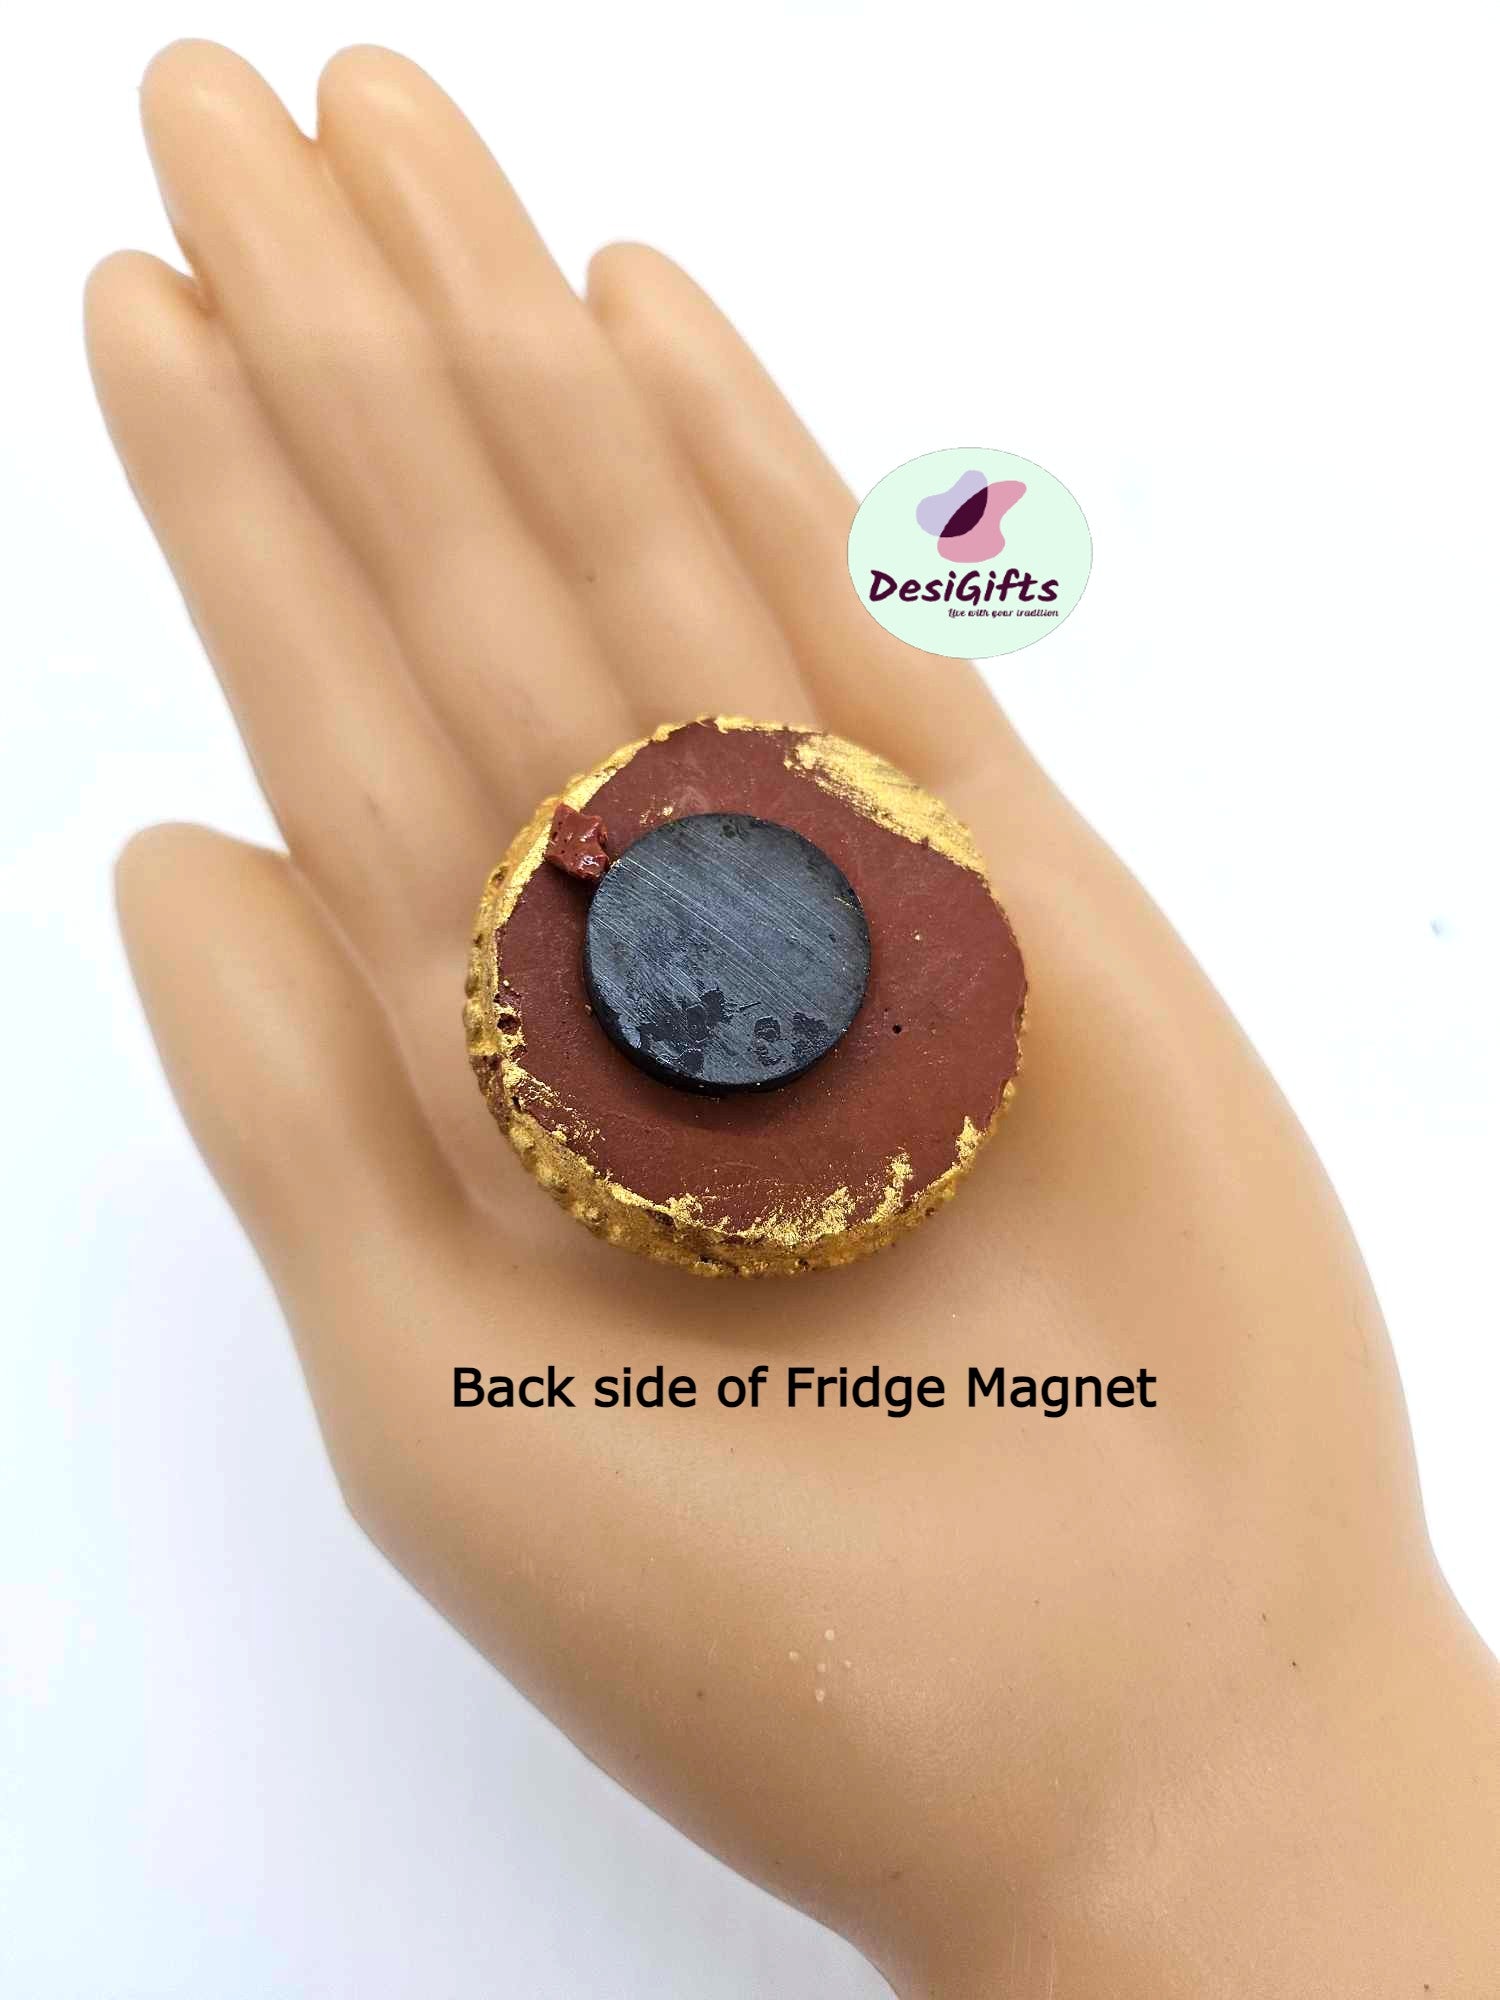 Ingenious Indian Miniature Fridge Food Magnet, Dollhouse Food, 3D Simulation Food Refrigerator Magnet, IFM - 1265